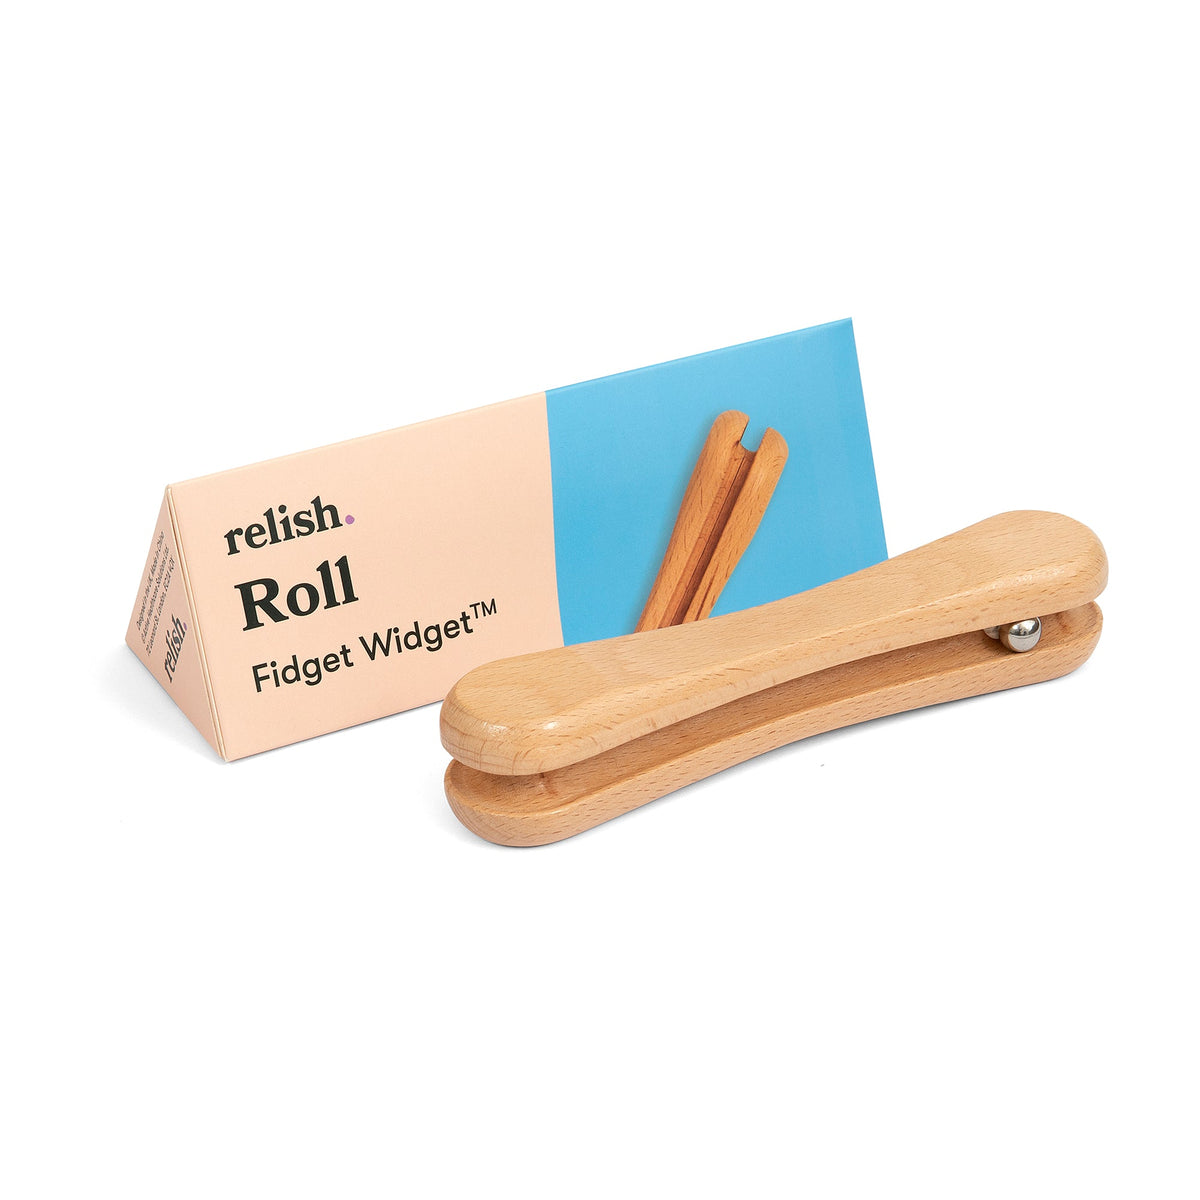 Roll Fidget Widget - VAT Free